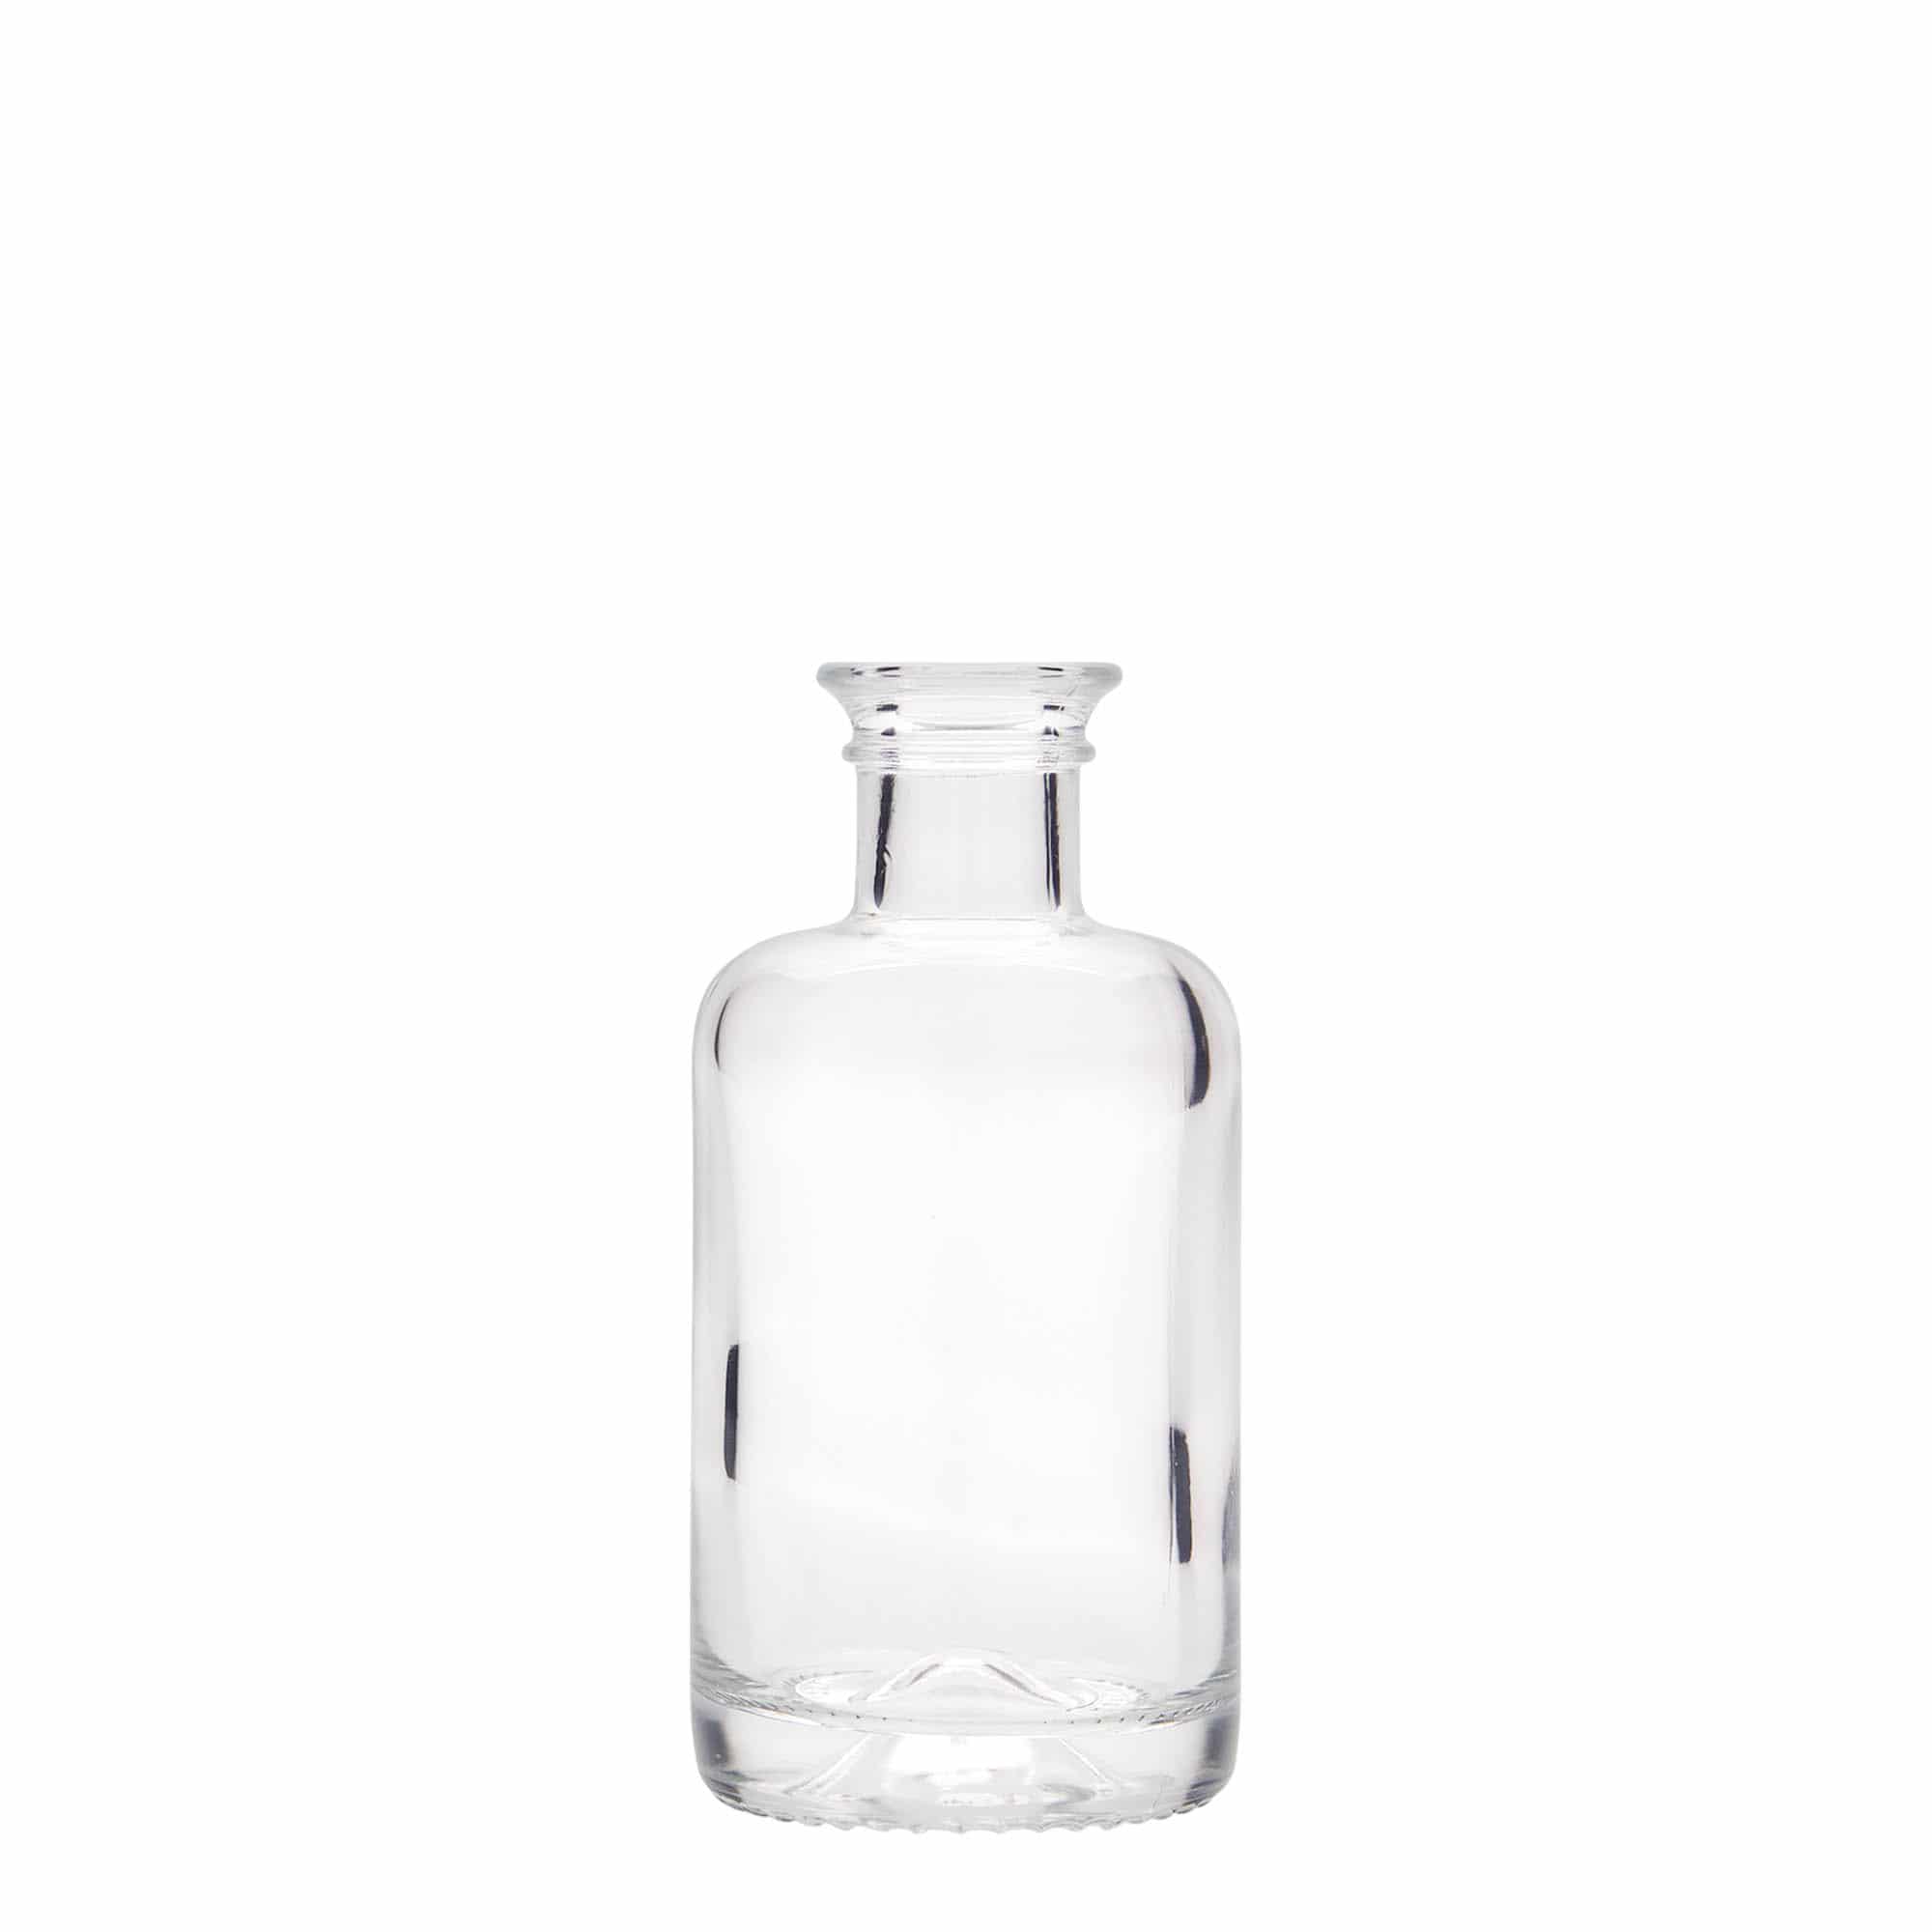 100 ml glass apothecary bottle, closure: cork